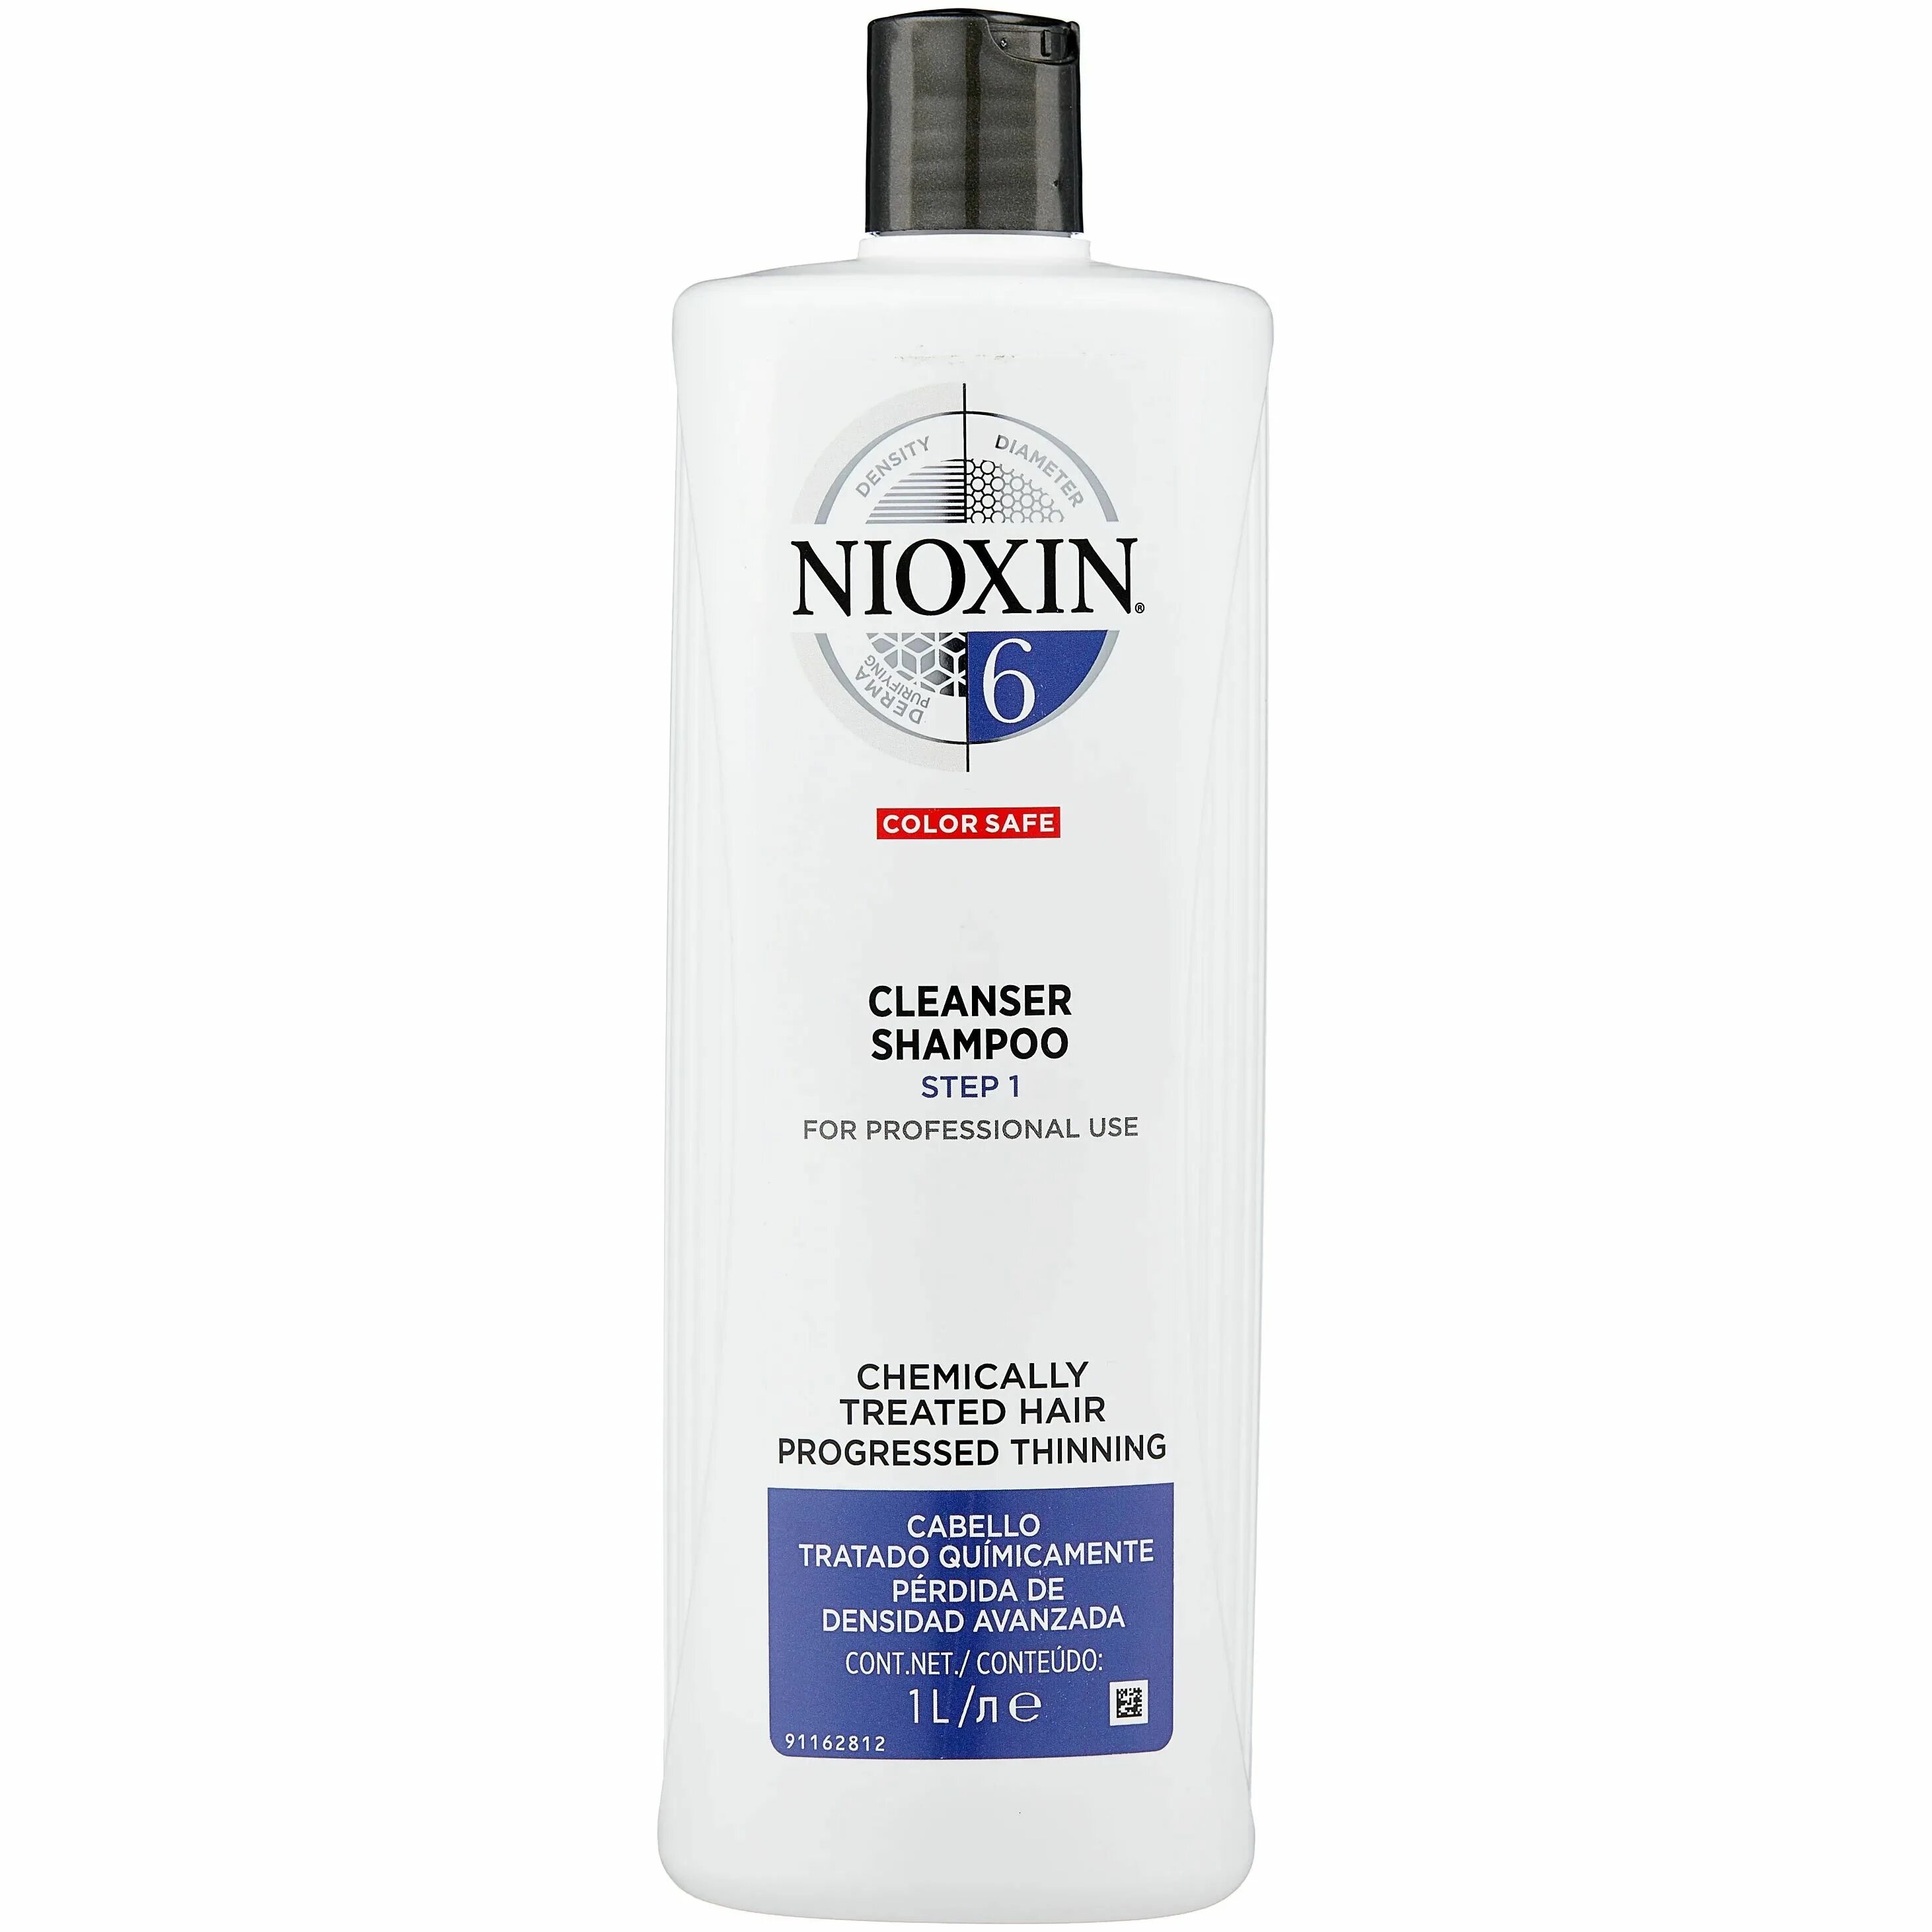 System shampoo. Nioxin Cleanser очищающий шампунь (система 3) System 3, 300 мл. Ниоксин шампунь 1000 мл. Nioxin очищающий шампунь (система 1) 1000мл. Nioxin шампунь System 6 Cleanser Step 1, 300 мл.